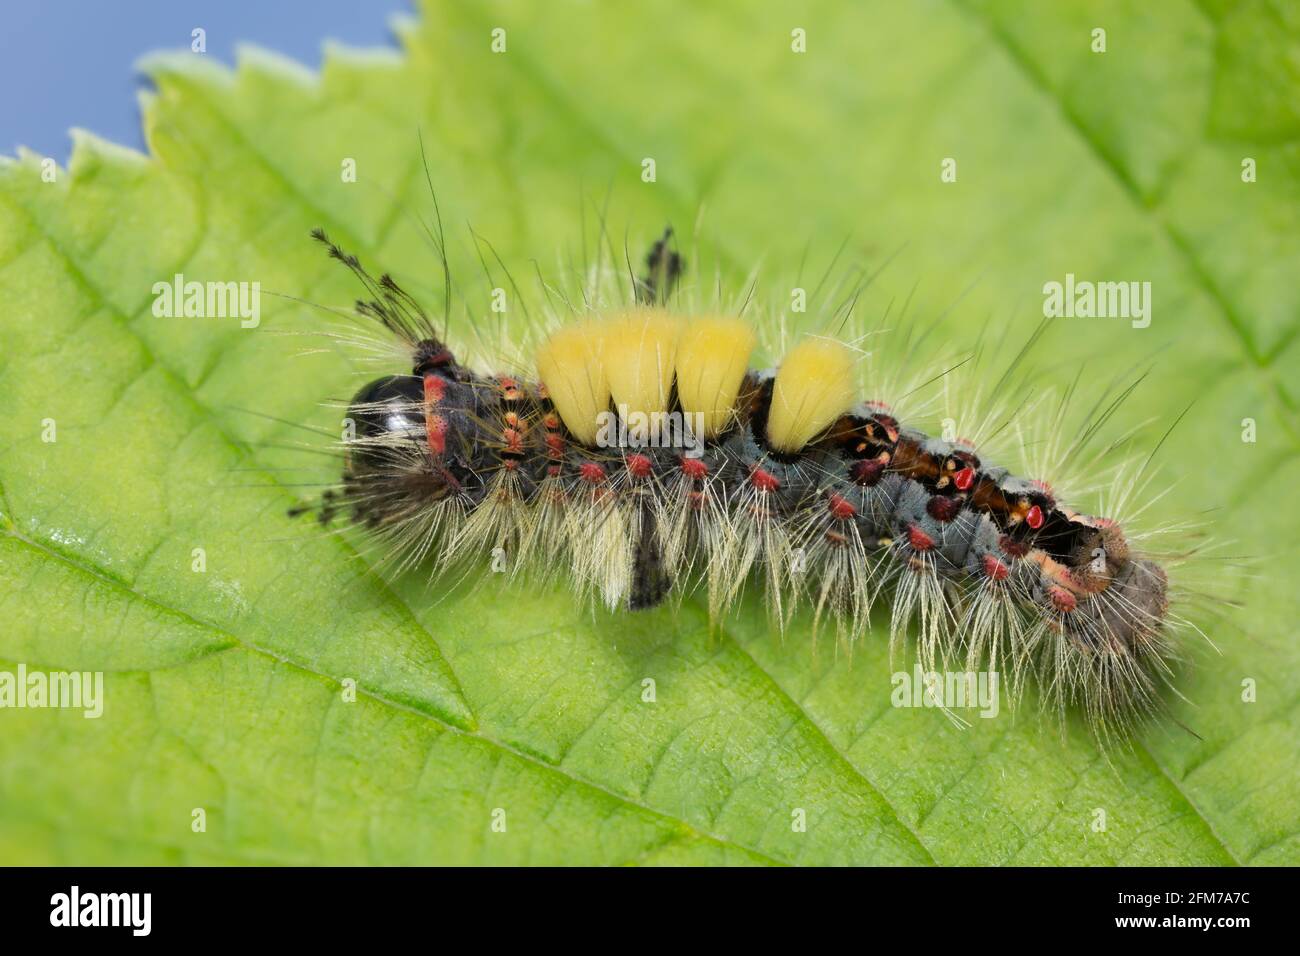 Rusty tussock moth, Orgyia antiqua larva on leaf Stock Photo